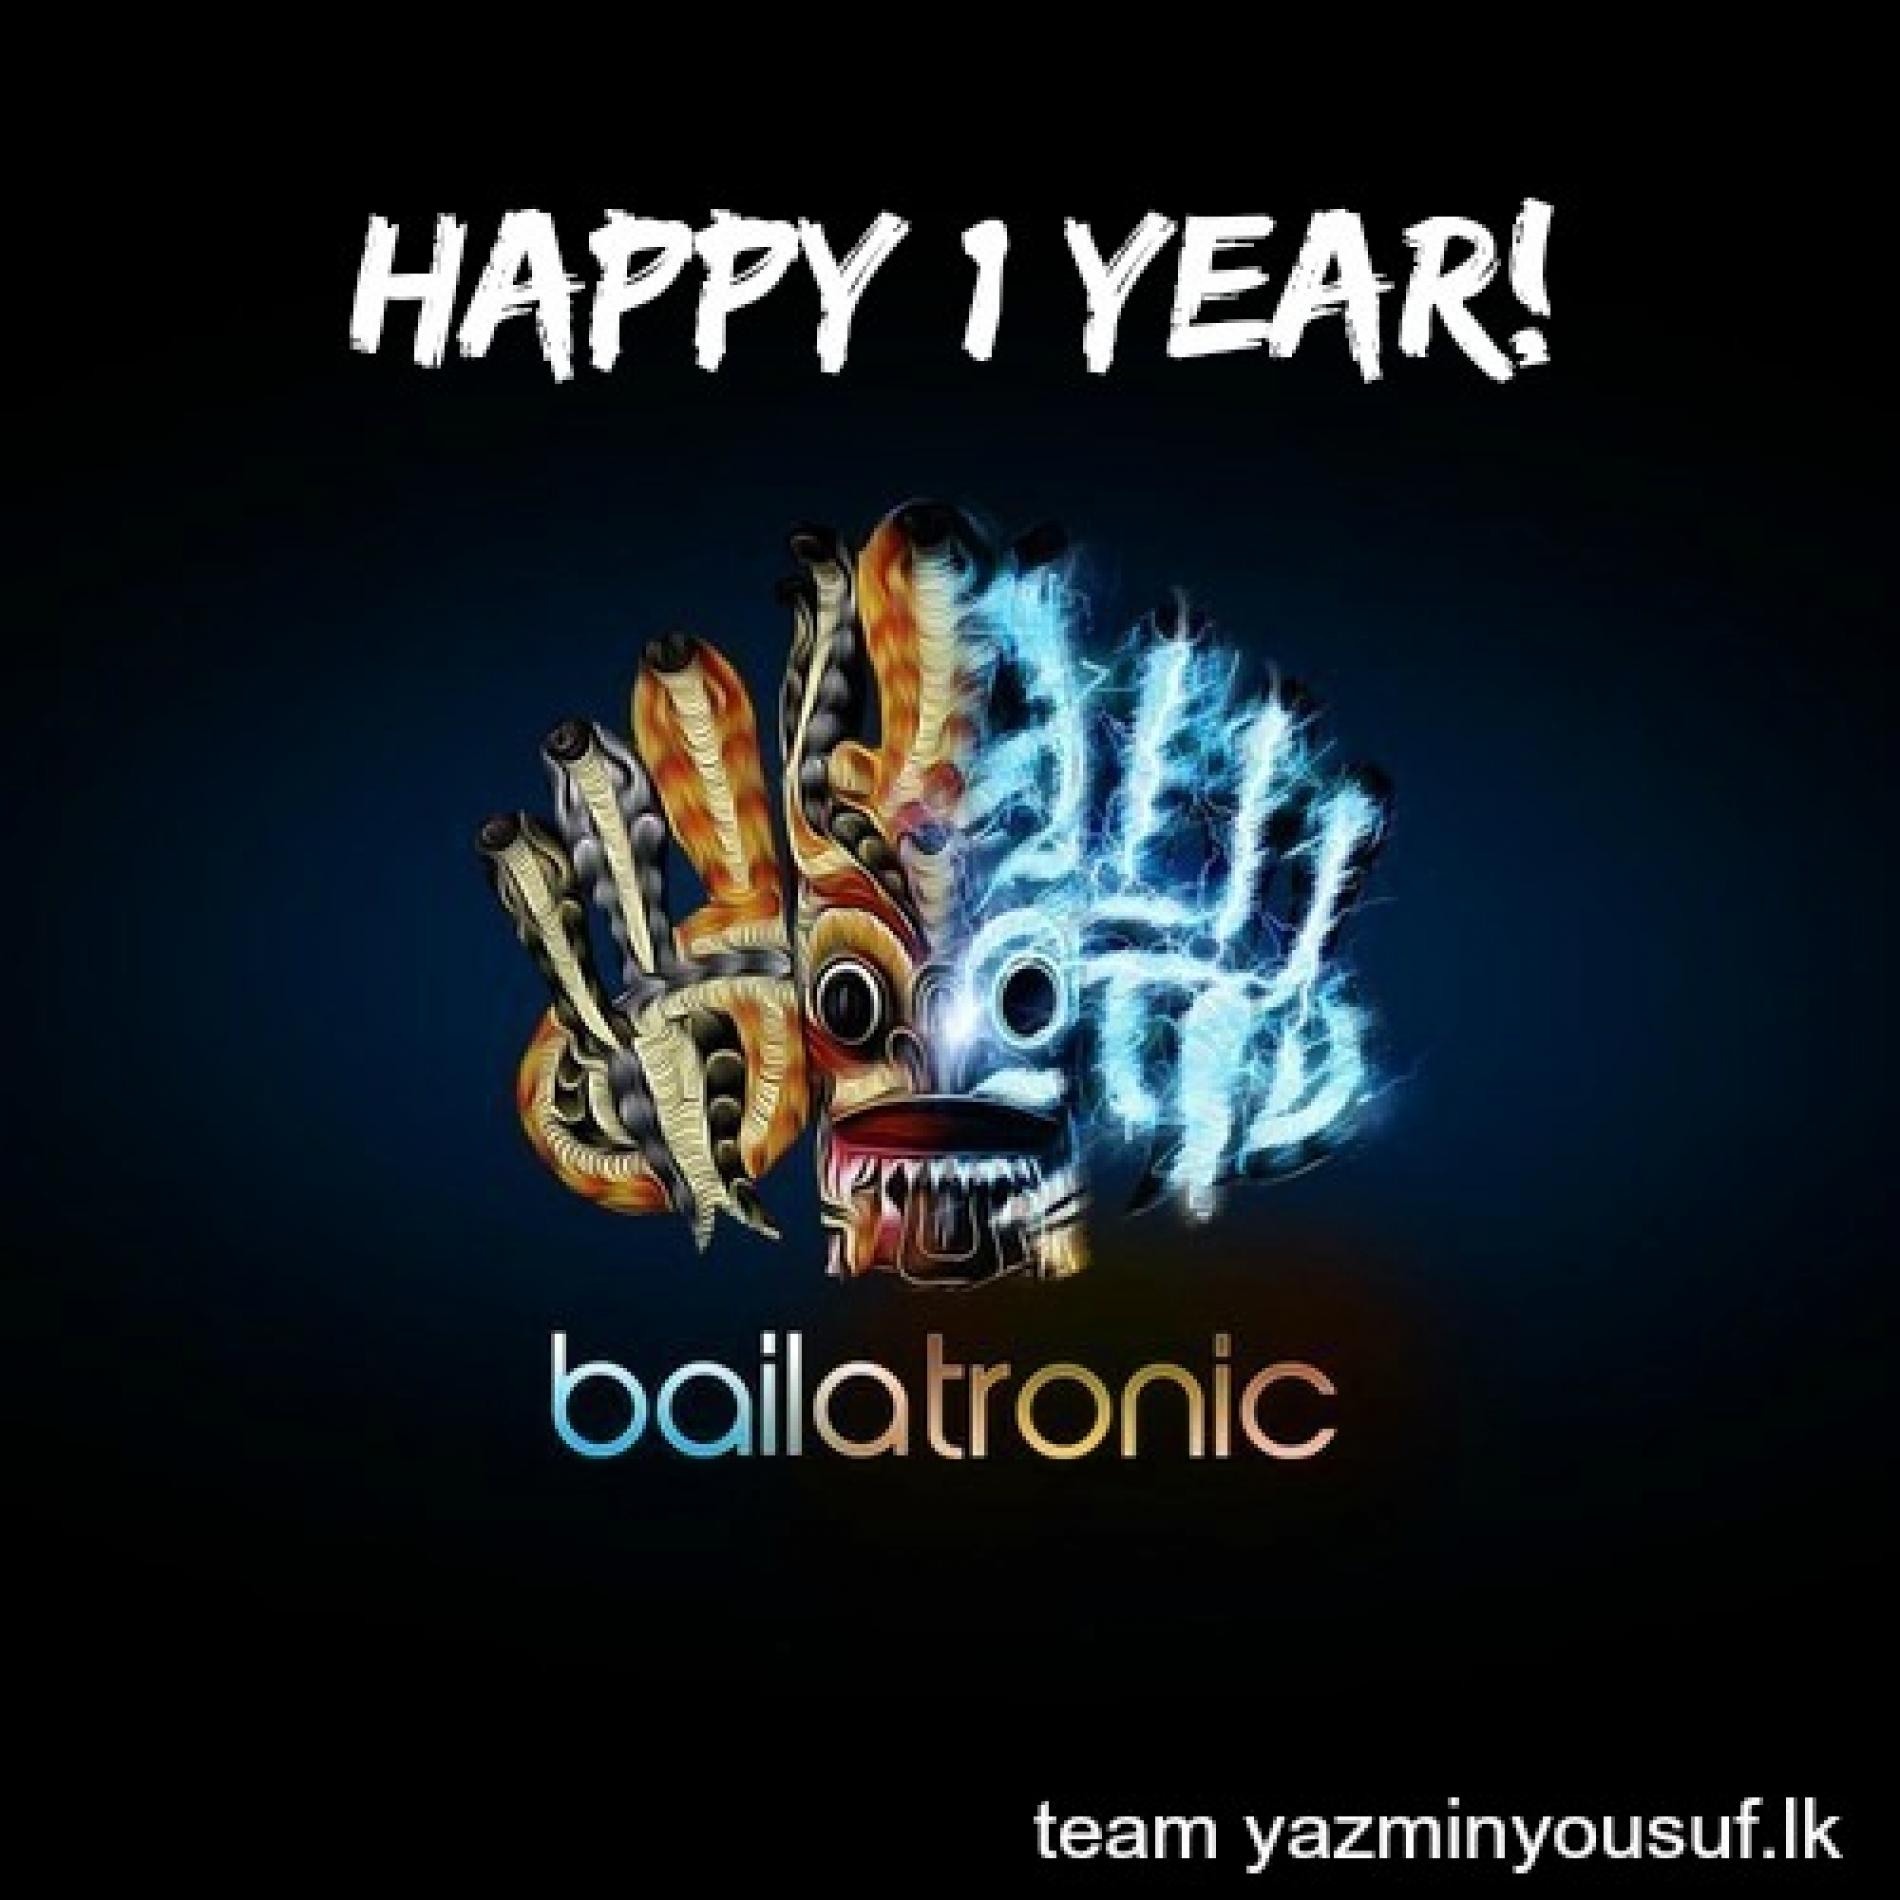 A Year Of Bailatronic